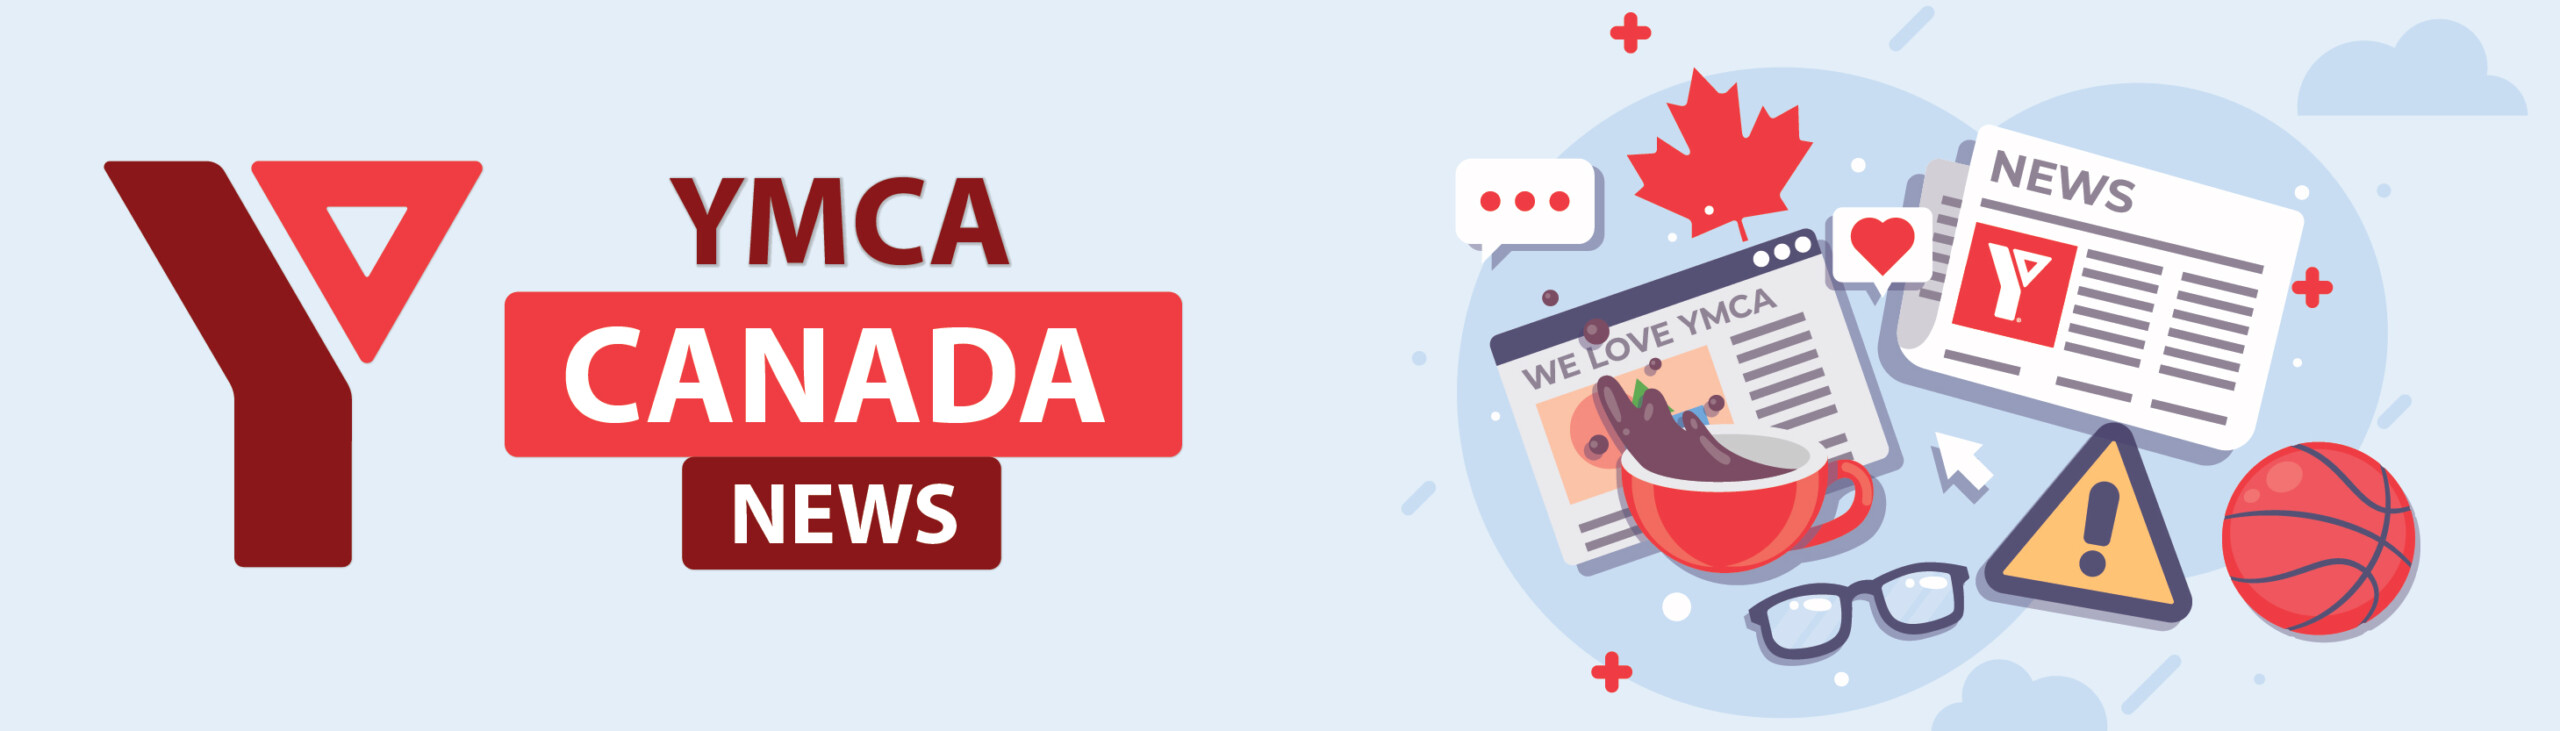 YMCA Canada News